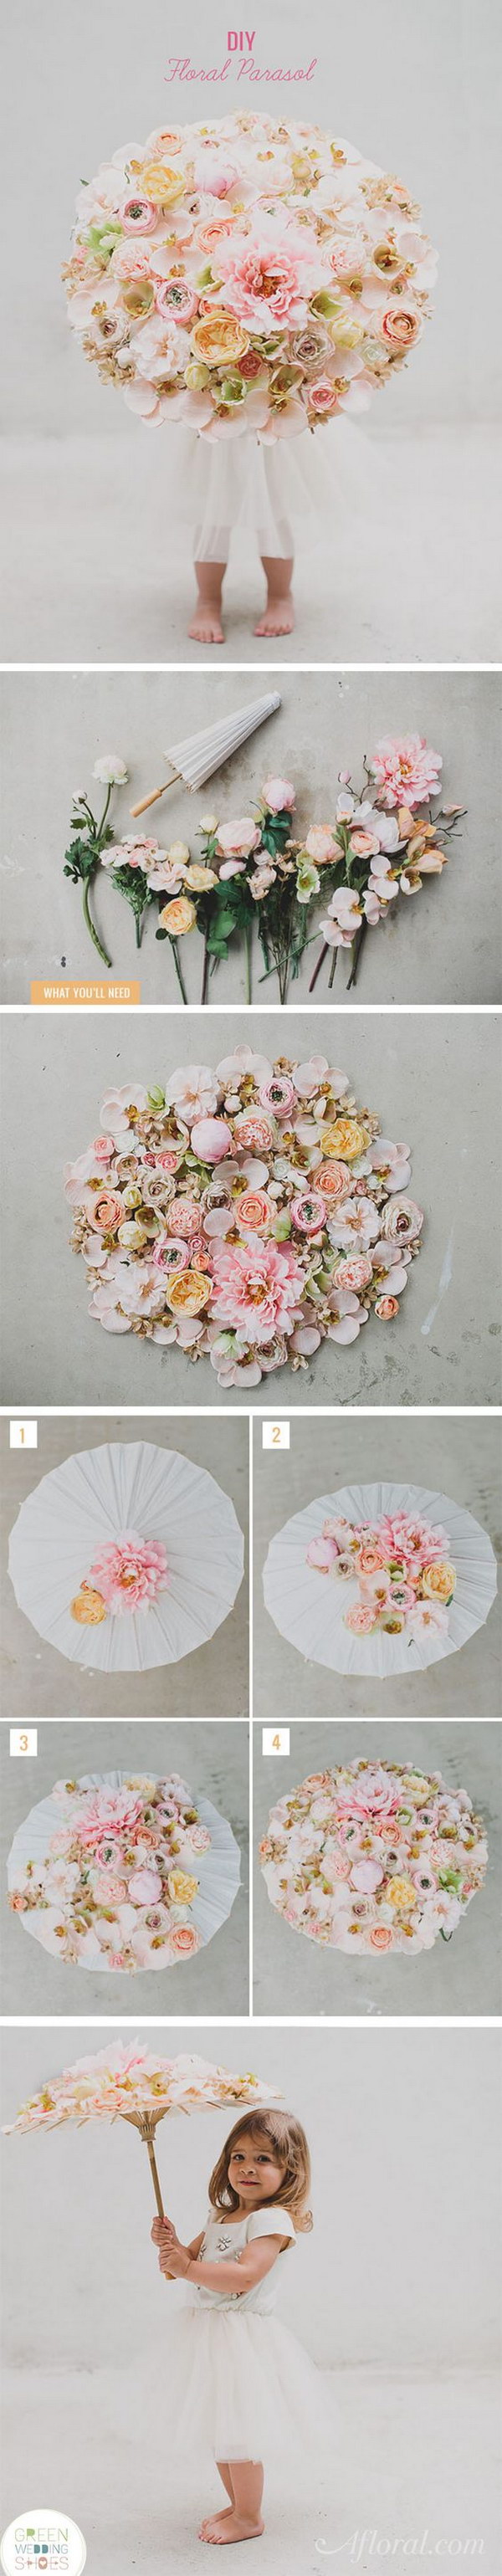 45 Awesome DIY Wedding Centerpiece Ideas and Tutorials